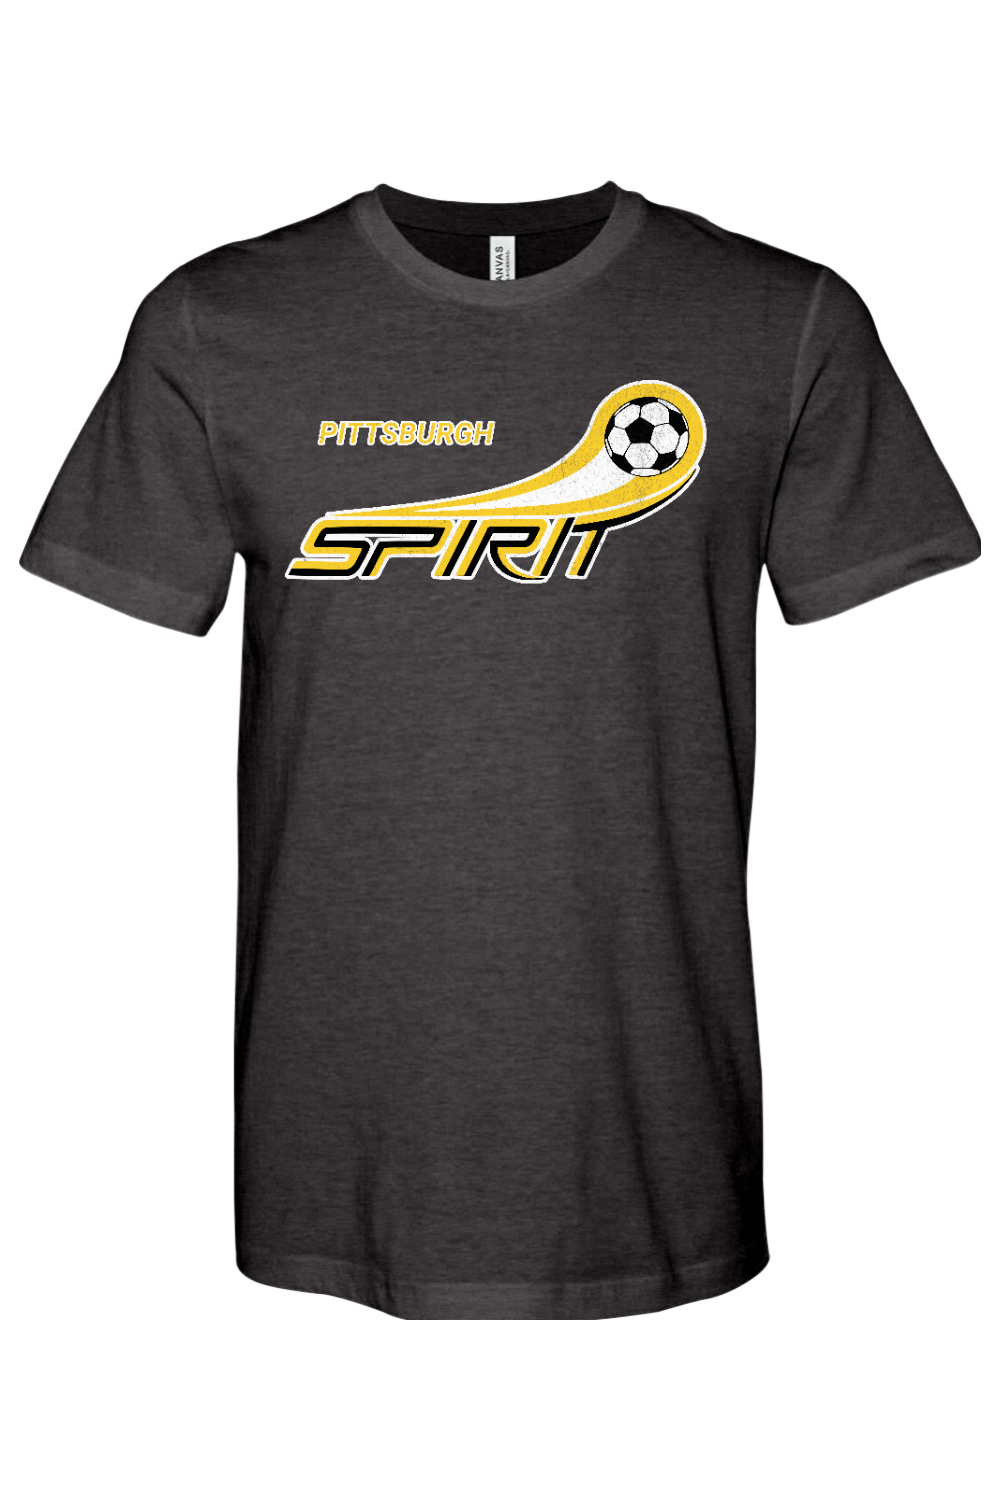 Pittsburgh Spirit - Indoor Soccer - Yinzylvania